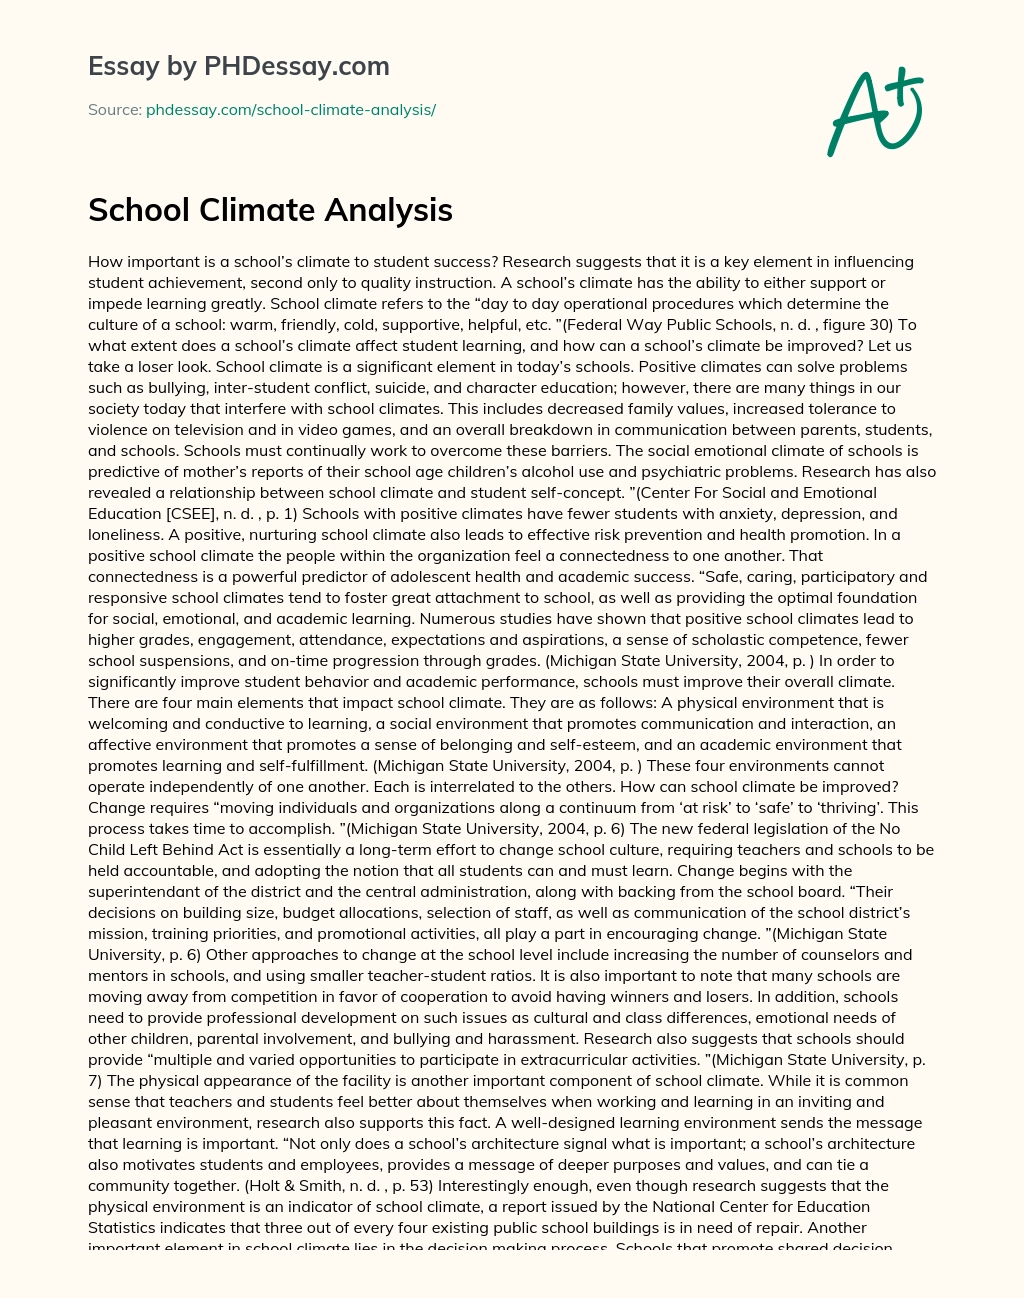 School Climate Analysis essay